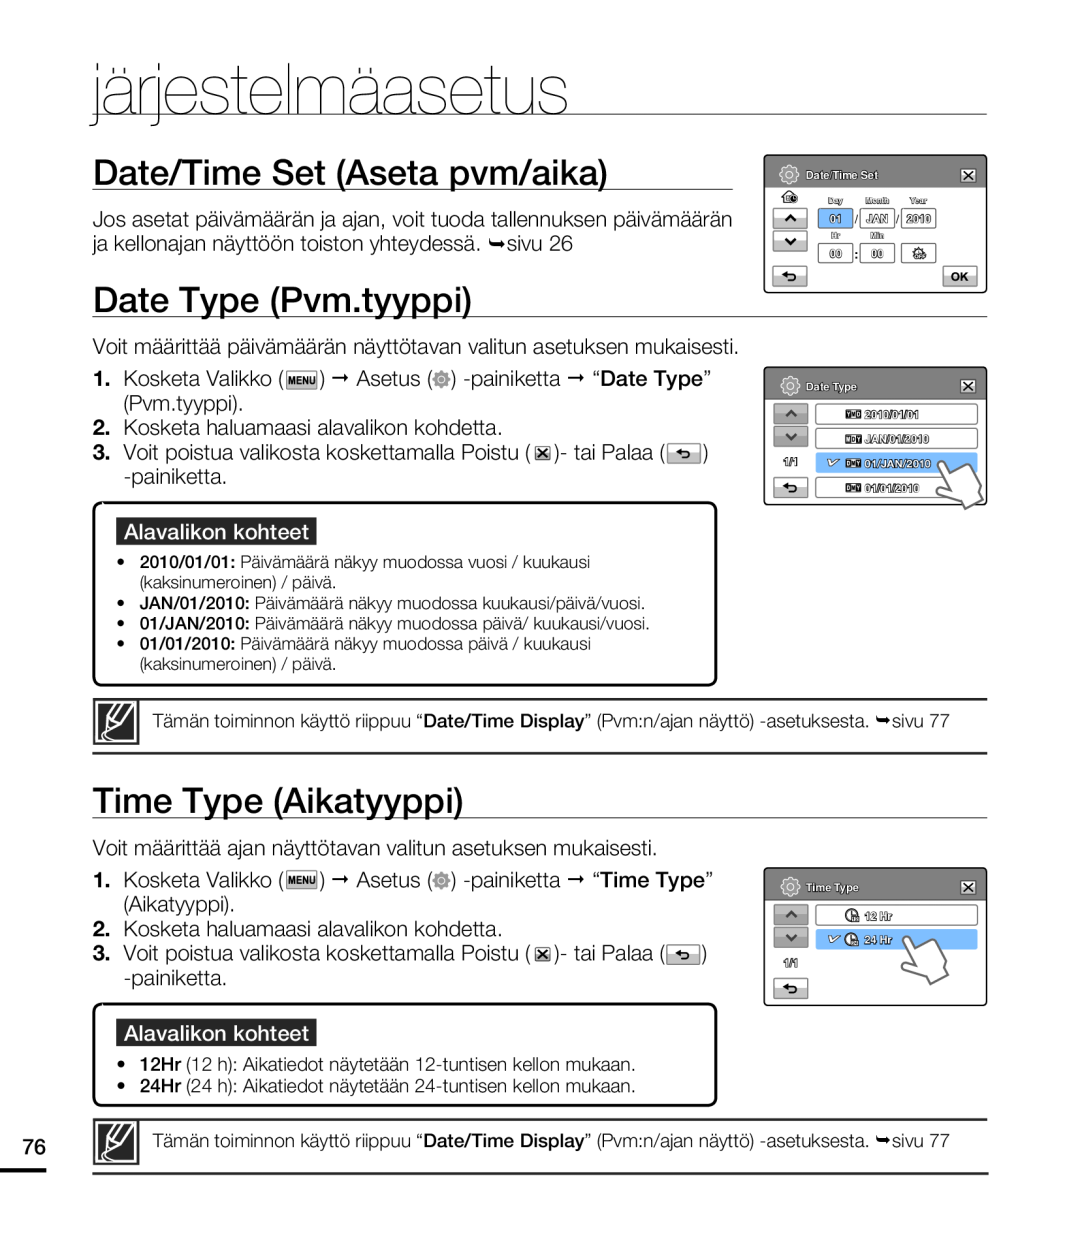 Samsung HMX-T10WP/EDC manual Date/Time Set Aseta pvm/aika, Date Type Pvm.tyyppi, Time Type Aikatyyppi, järjestelmäasetus 